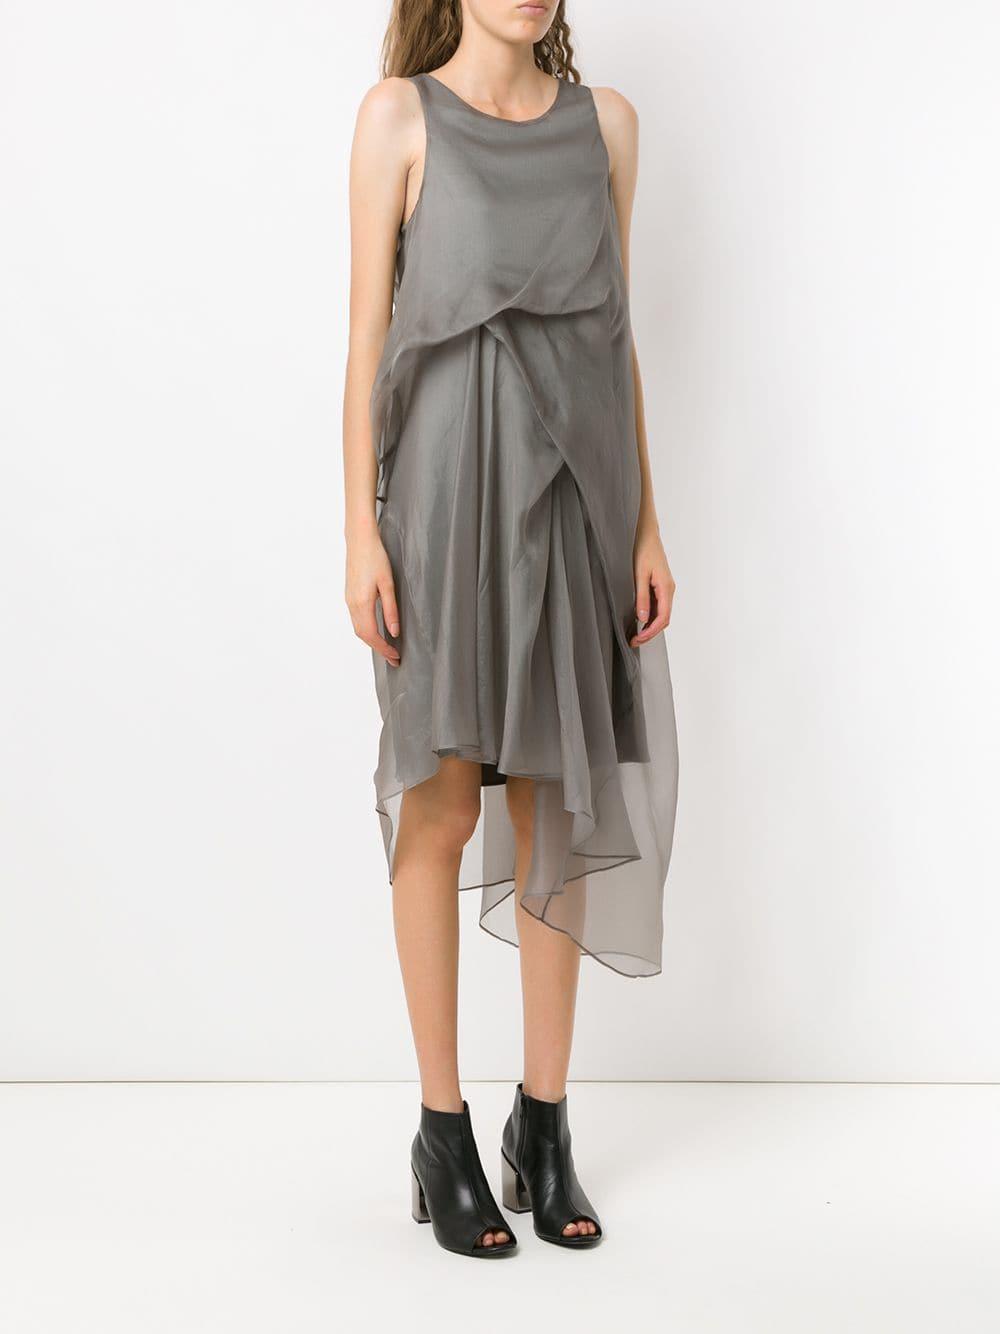 UMA | Raquel Davidowicz Silk Loren Midi Dress in Grey (Gray) - Lyst